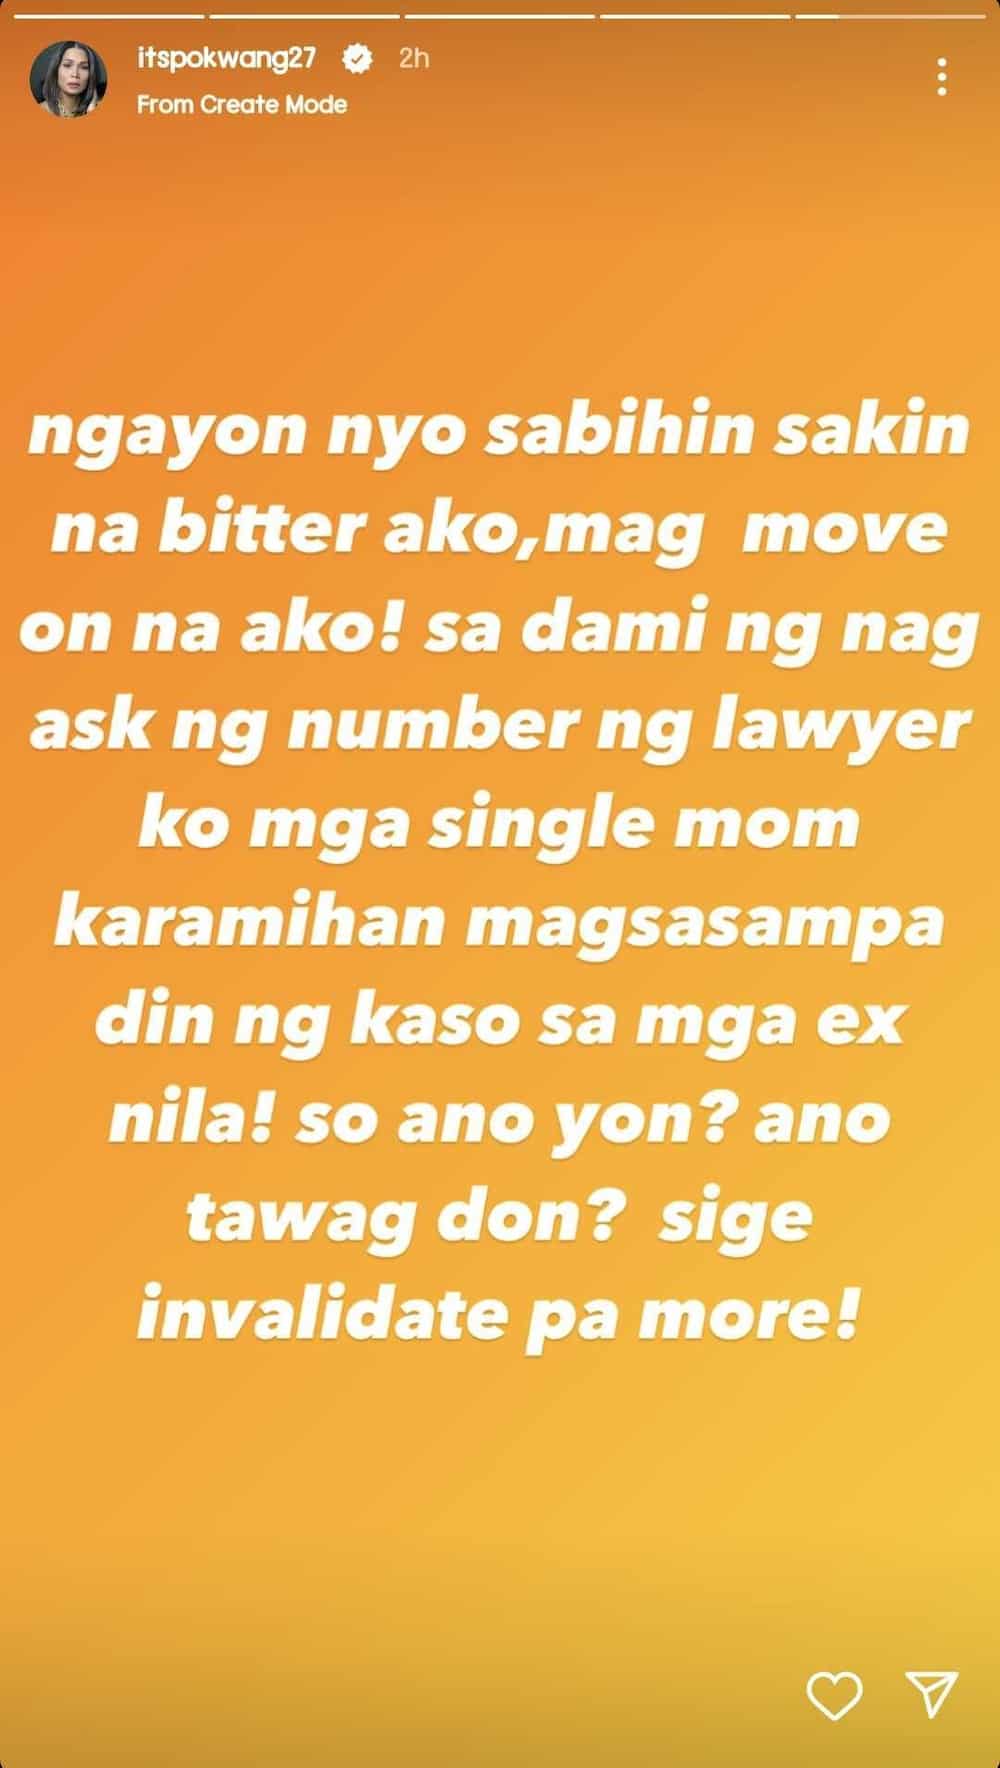 Pokwang, may bagong patutsada online: "Sige invalidate pa more!"